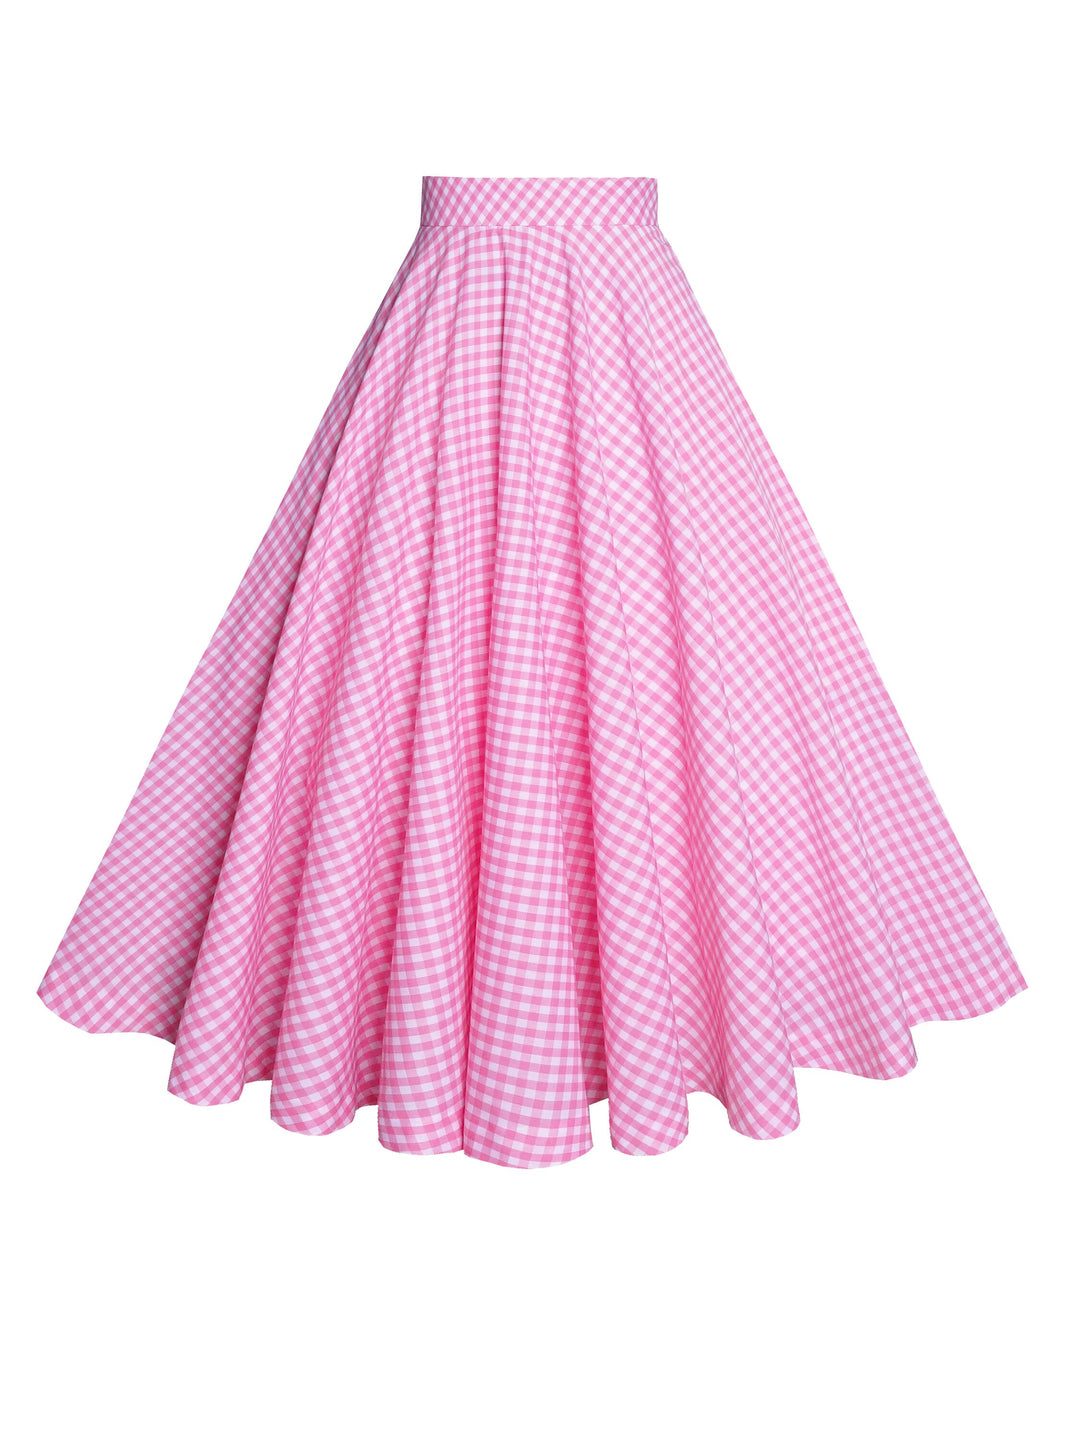 Full Circle Skirt Pink Gingham